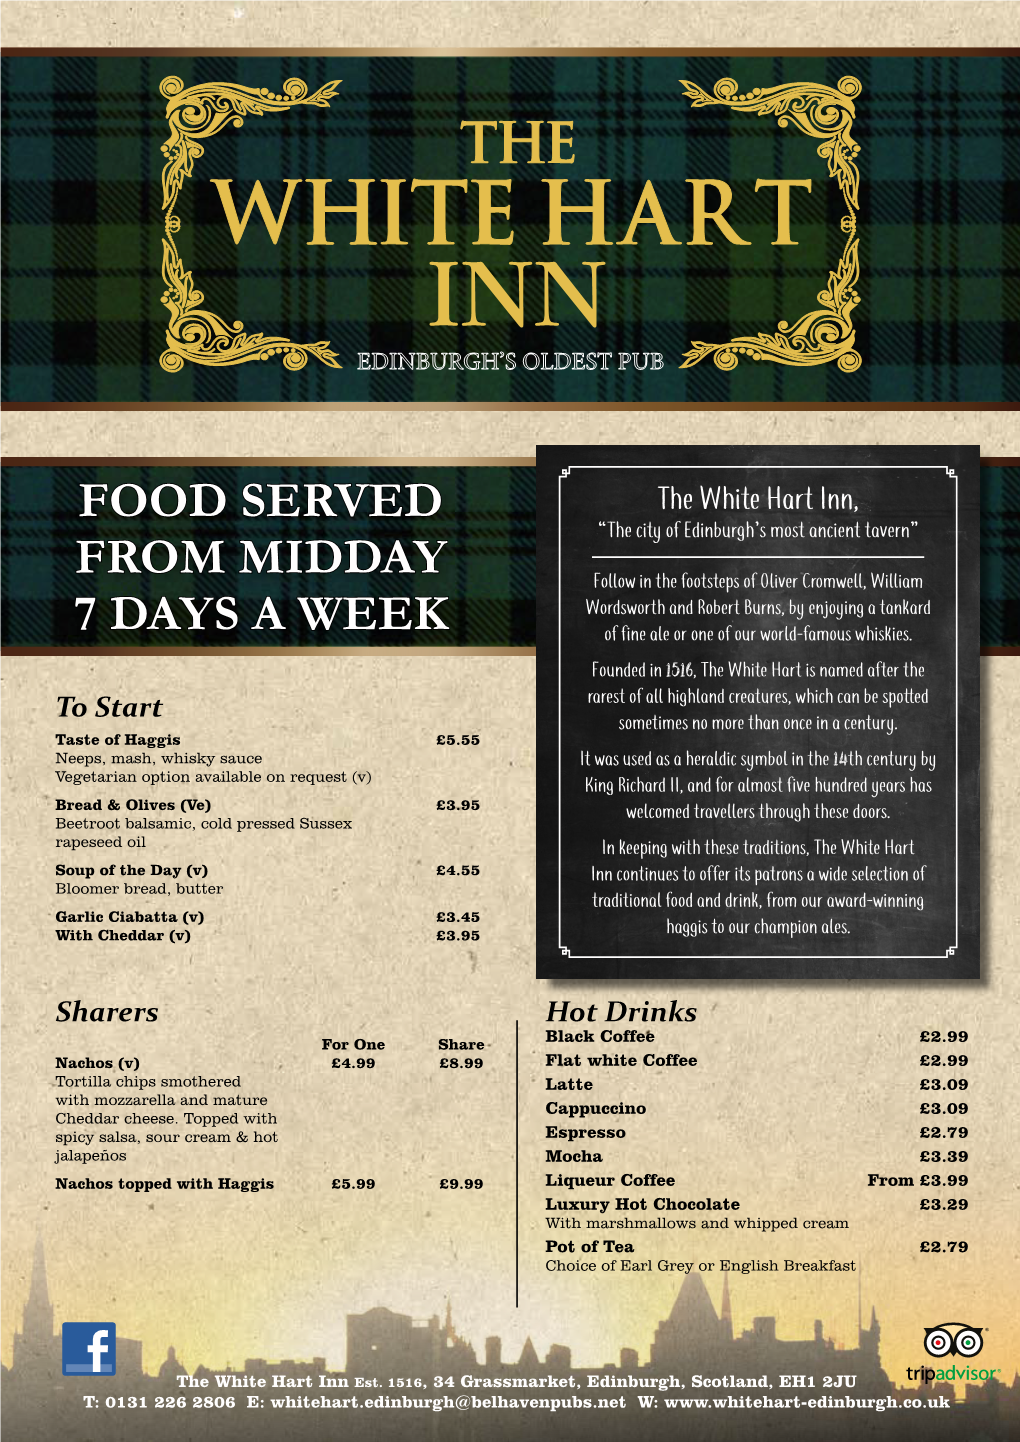 The White Hart Inn, “The City of Edinburgh’S Most Ancient Tavern”